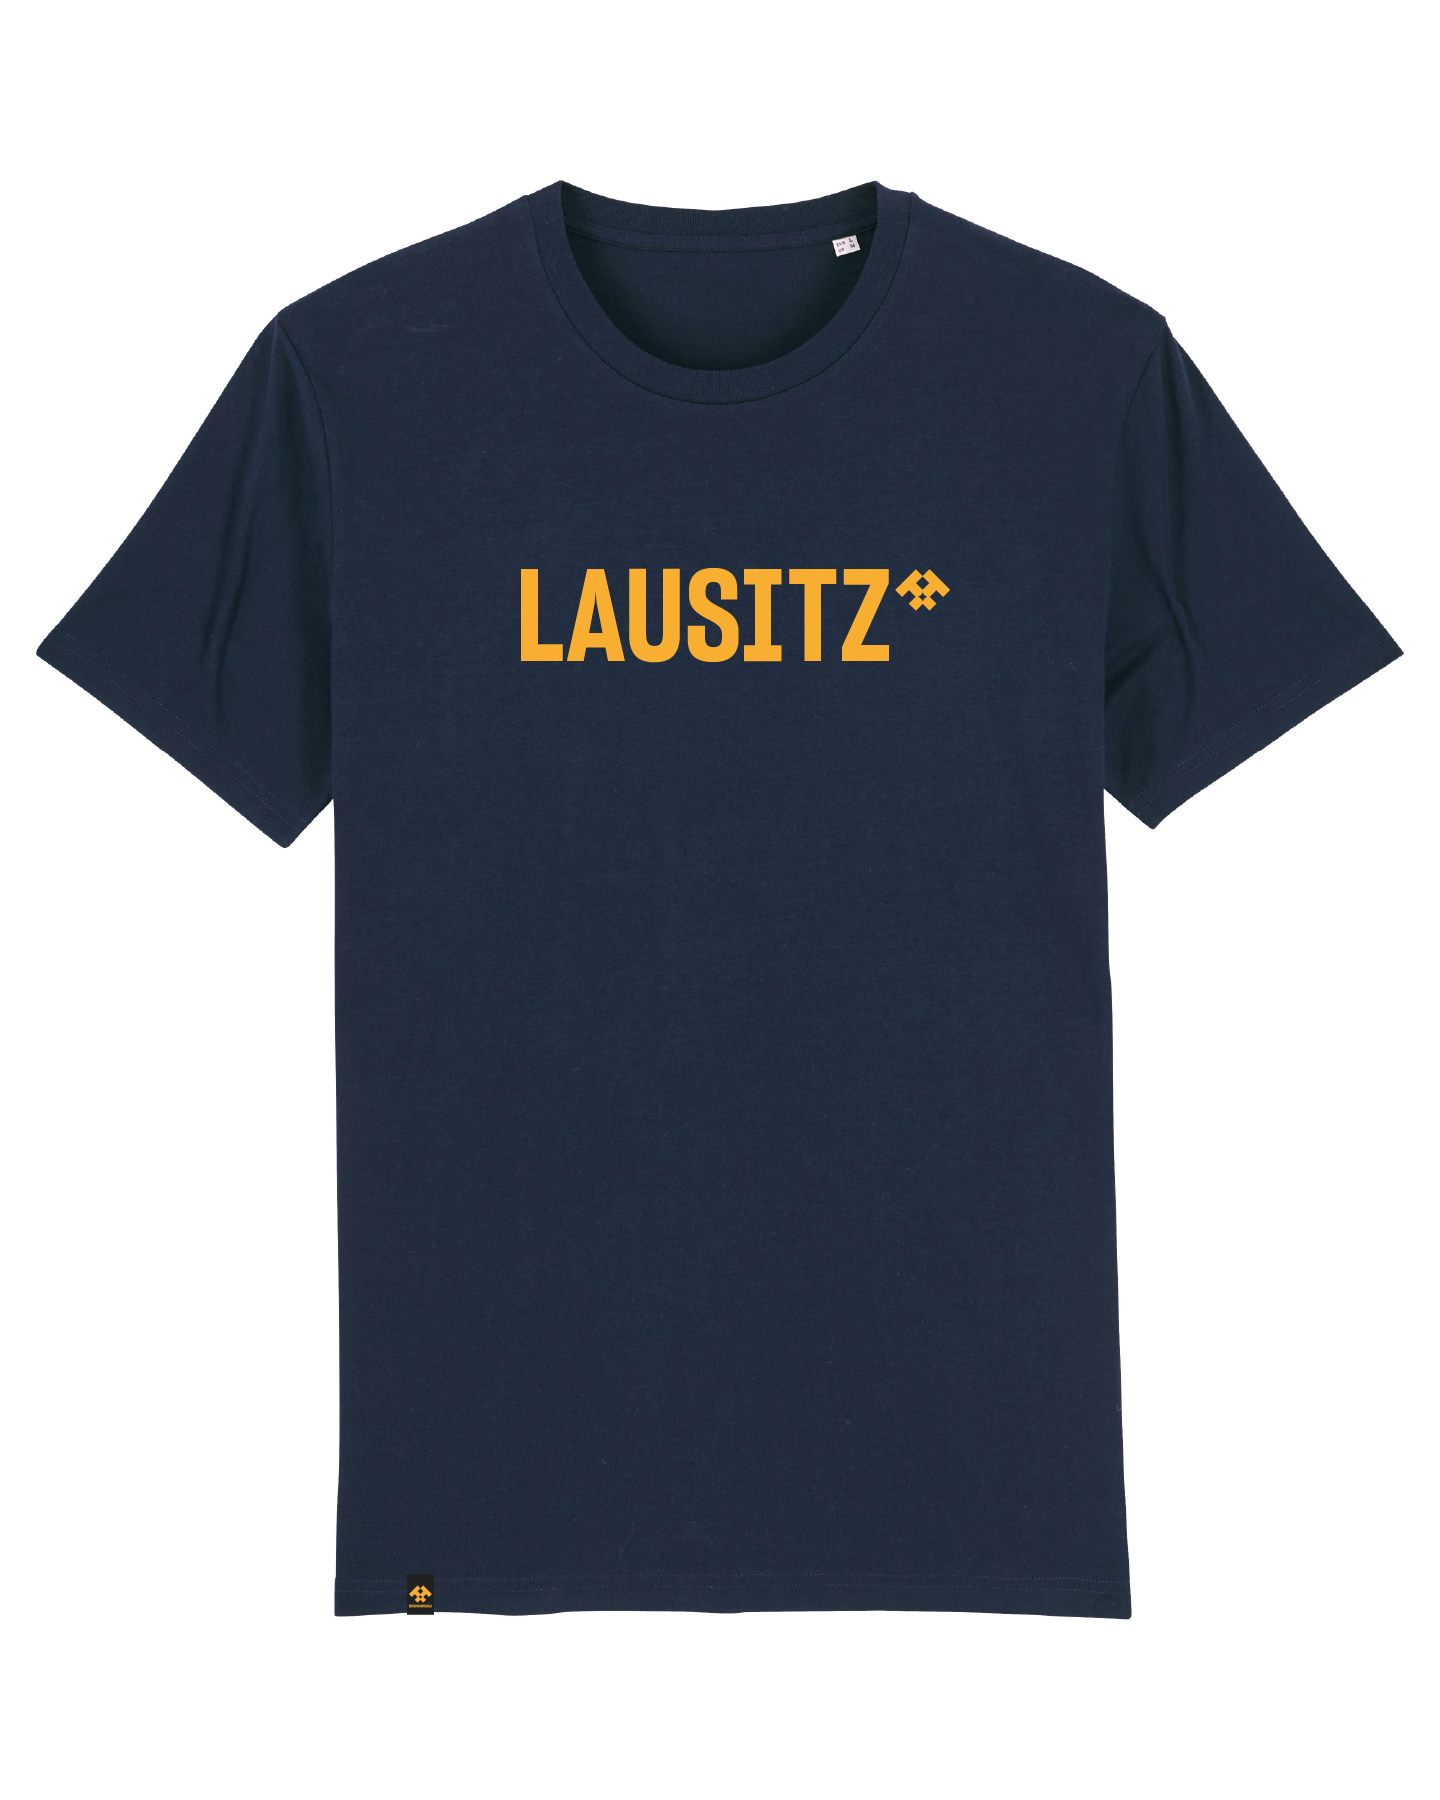 T-Shirt Herren LAUSITZ navy blau